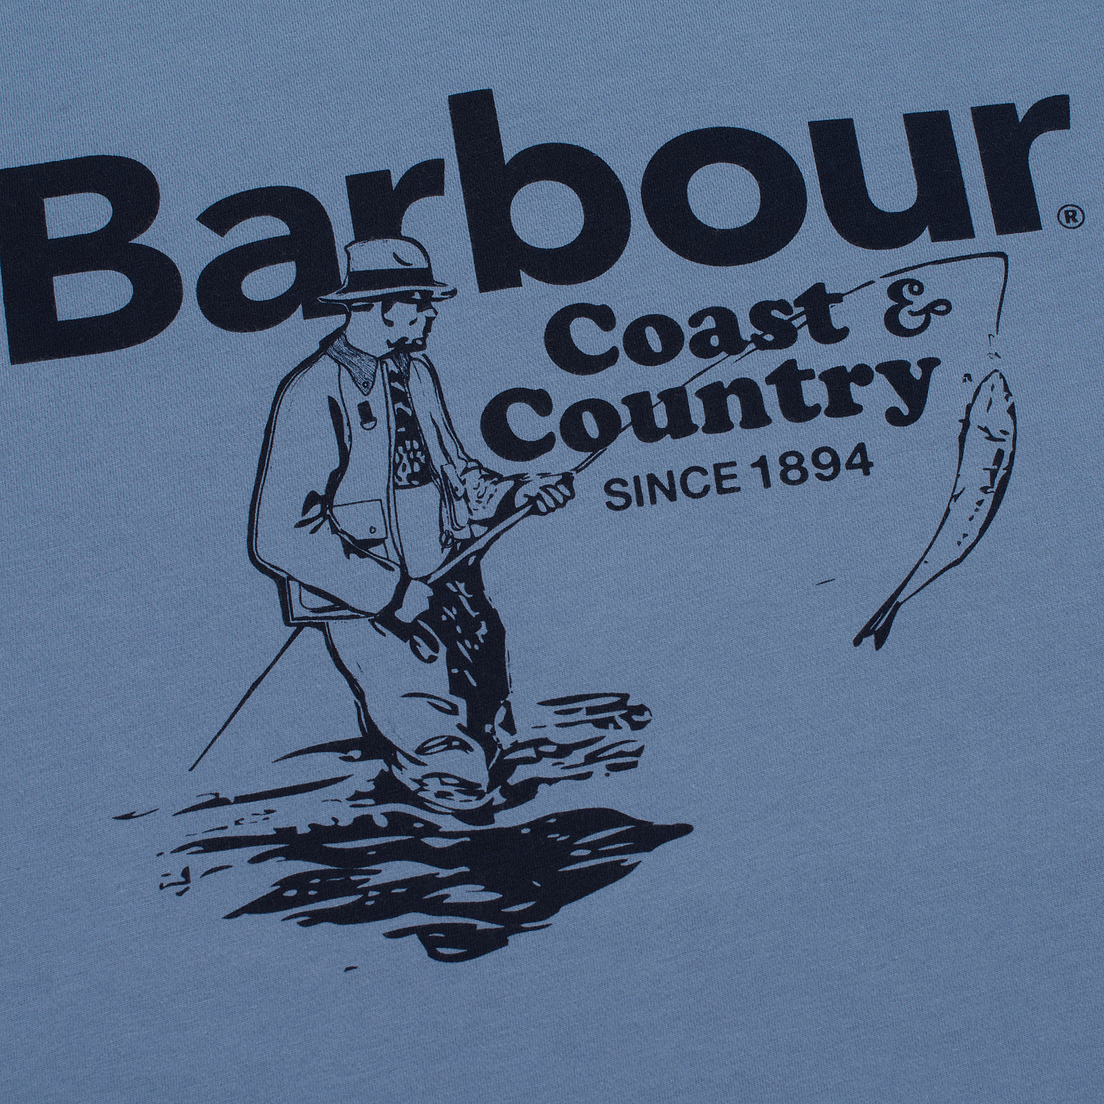 Barbour Мужская футболка Fisherman